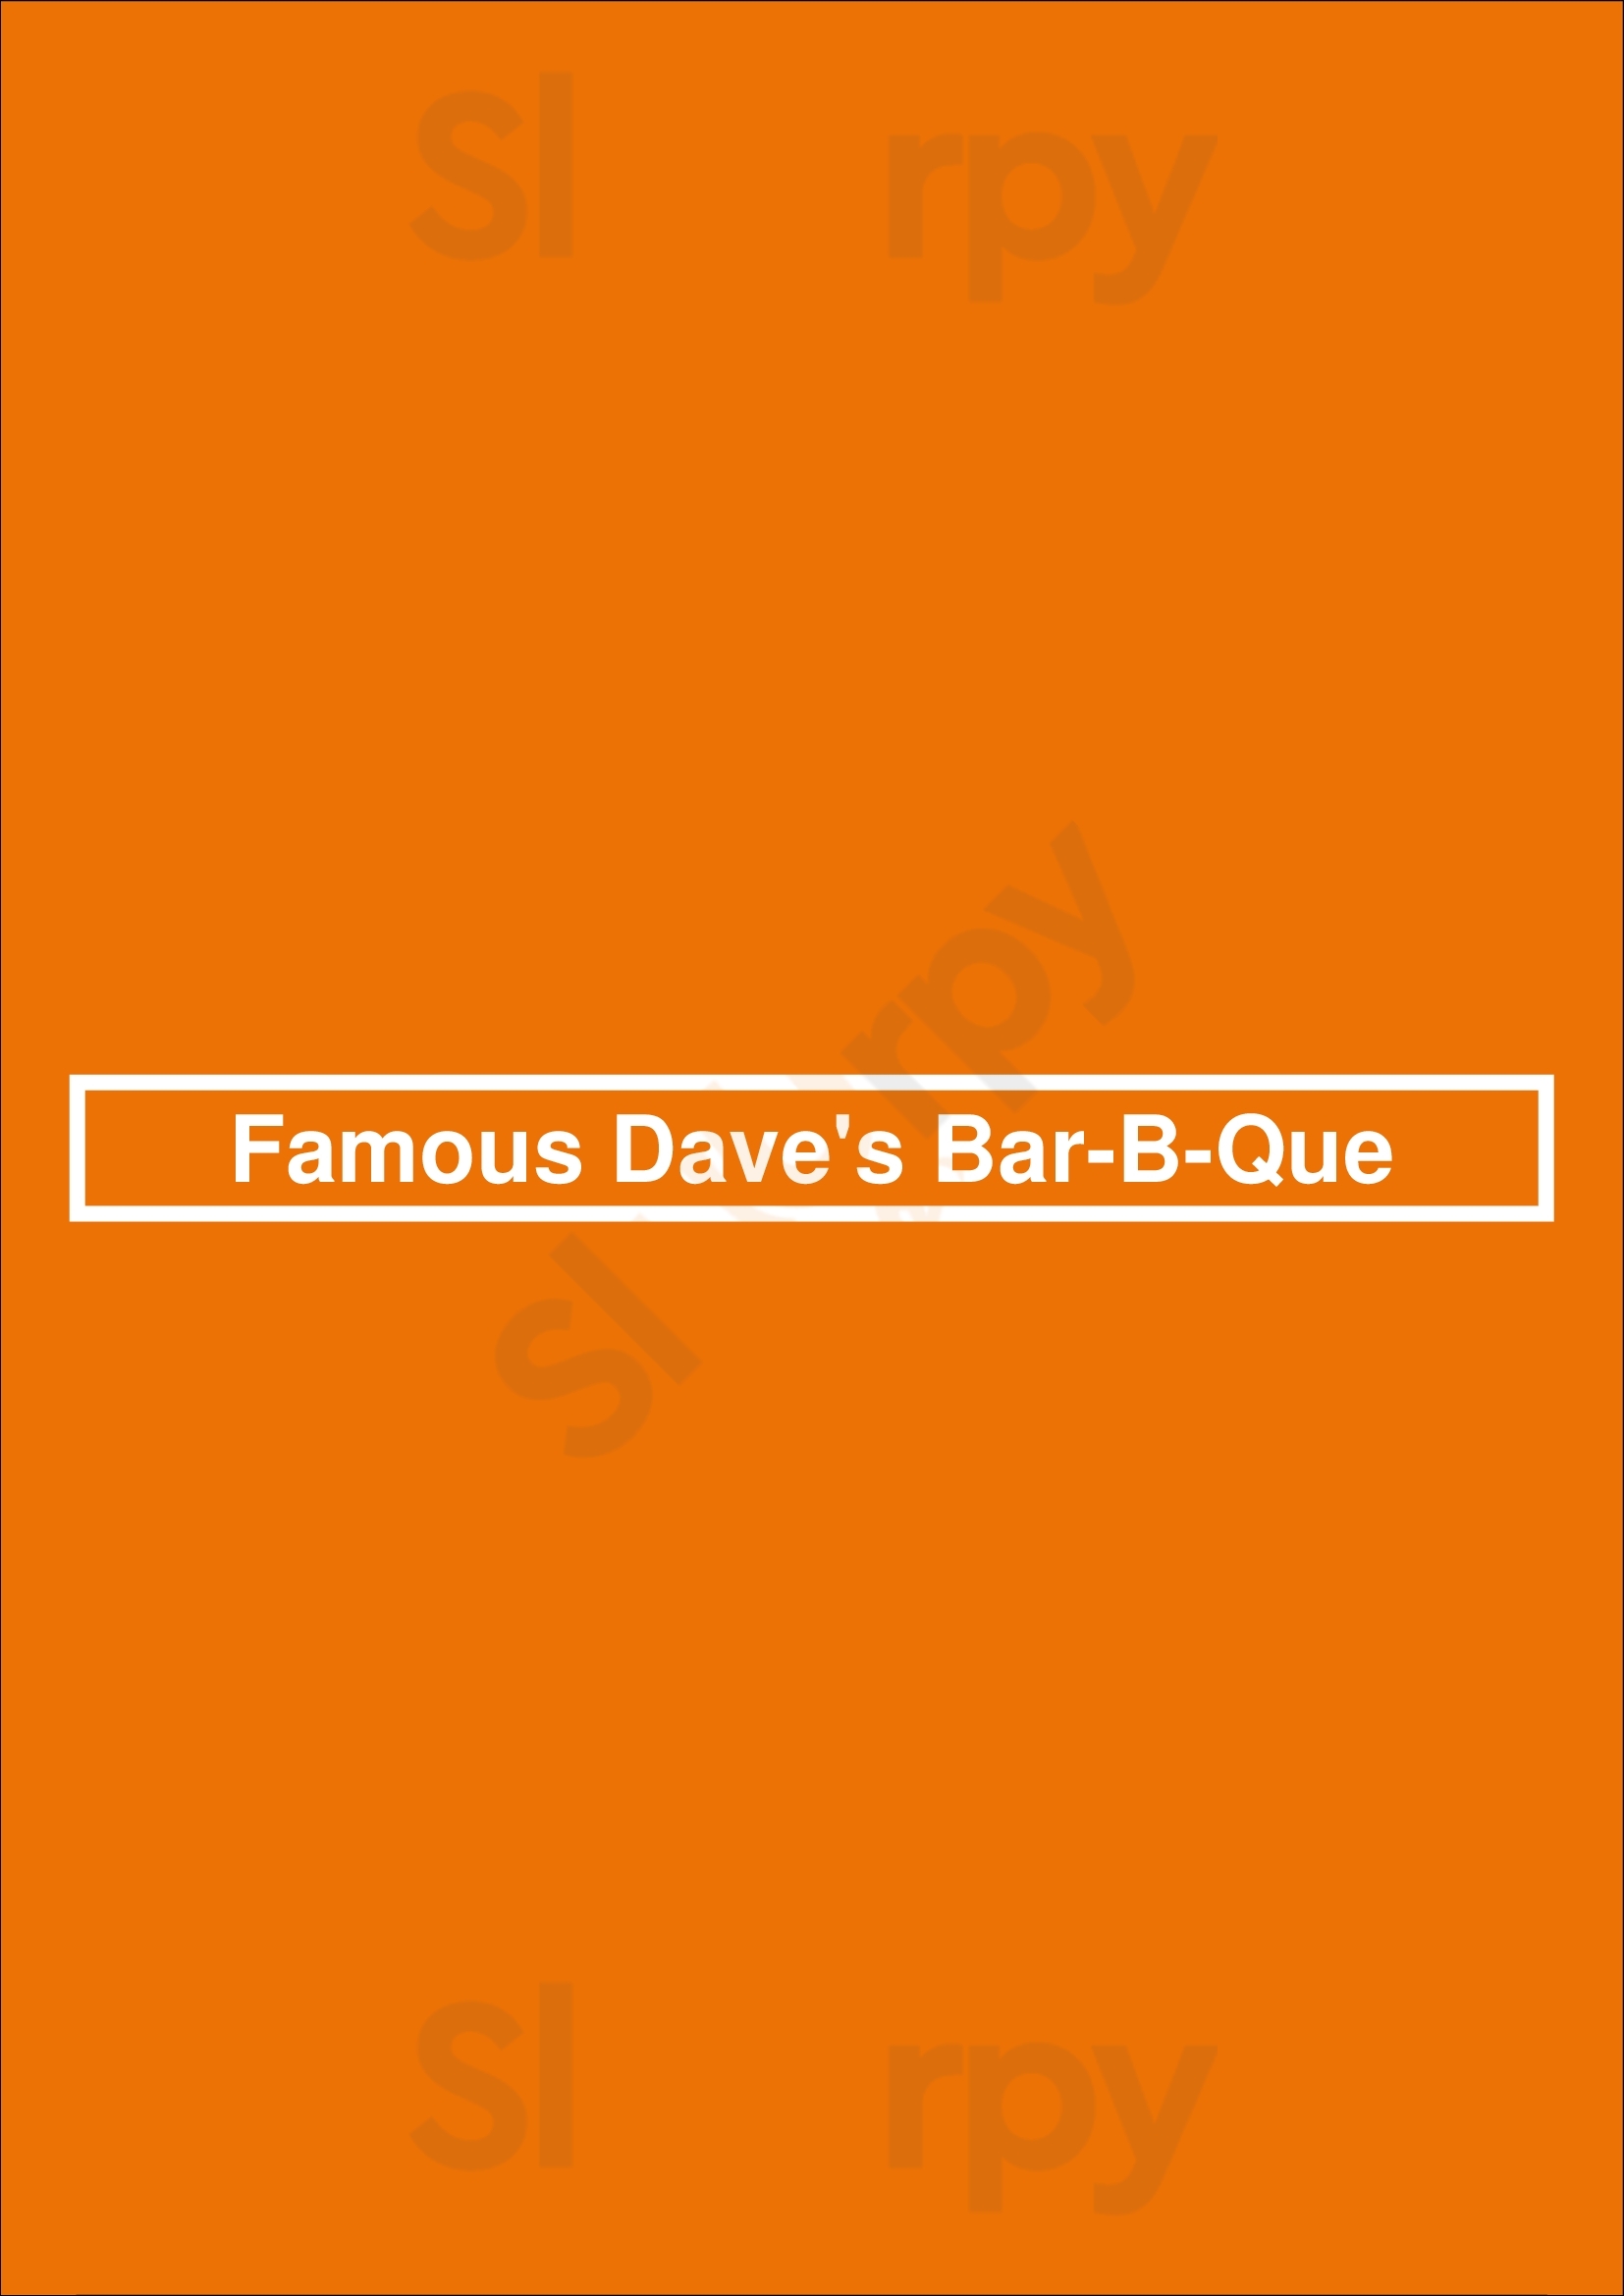 Famous Dave's Bar-b-que Indianapolis Menu - 1